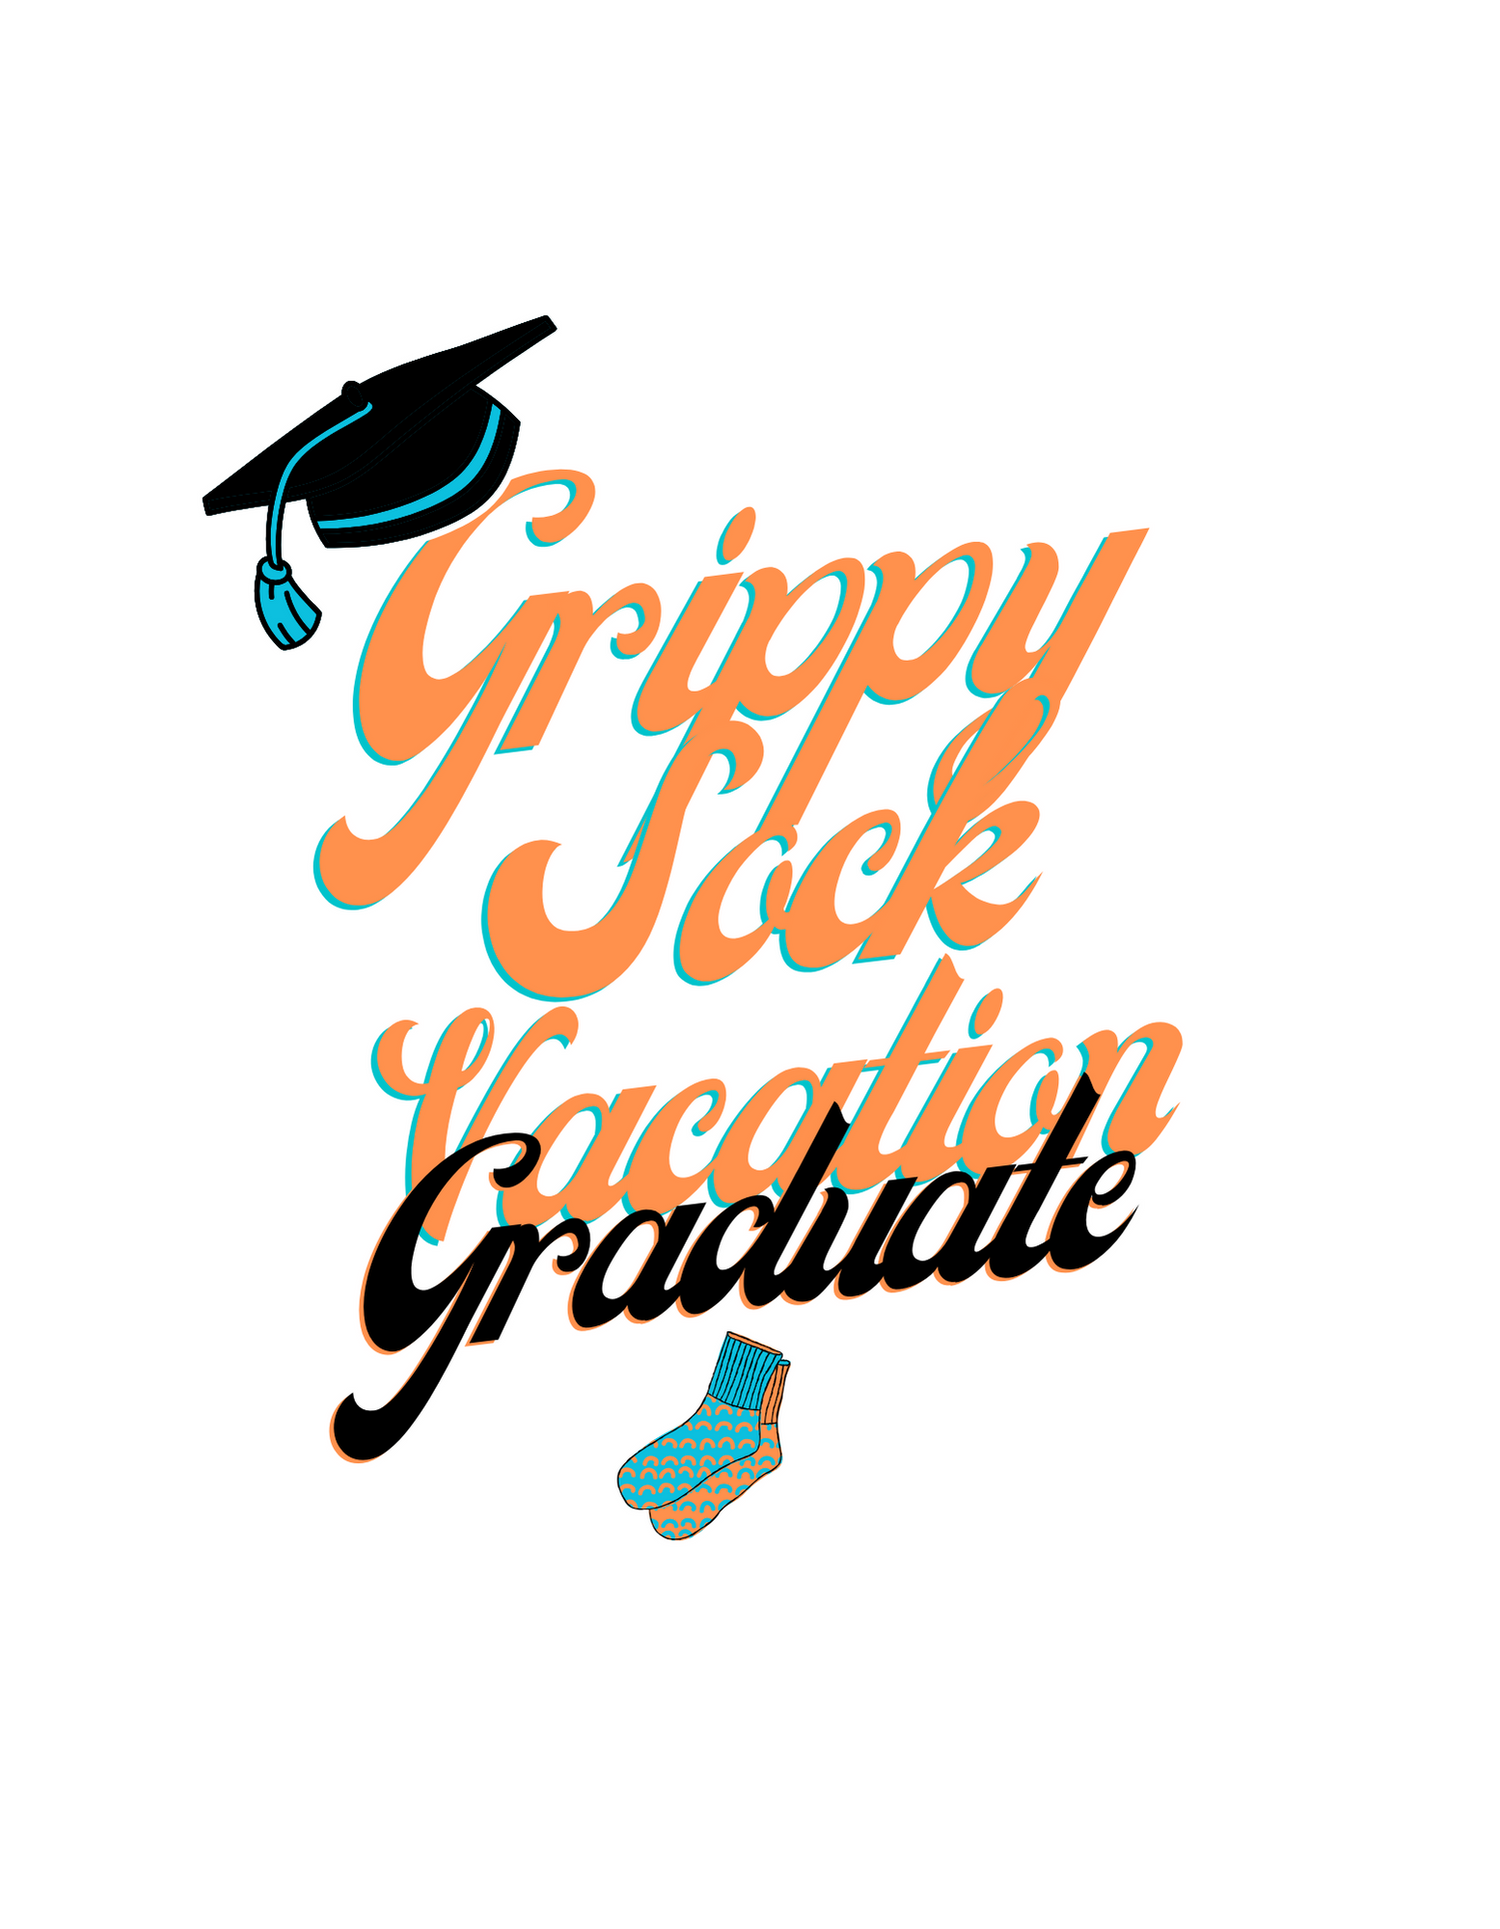 Grippy Sock Vacation Graduate